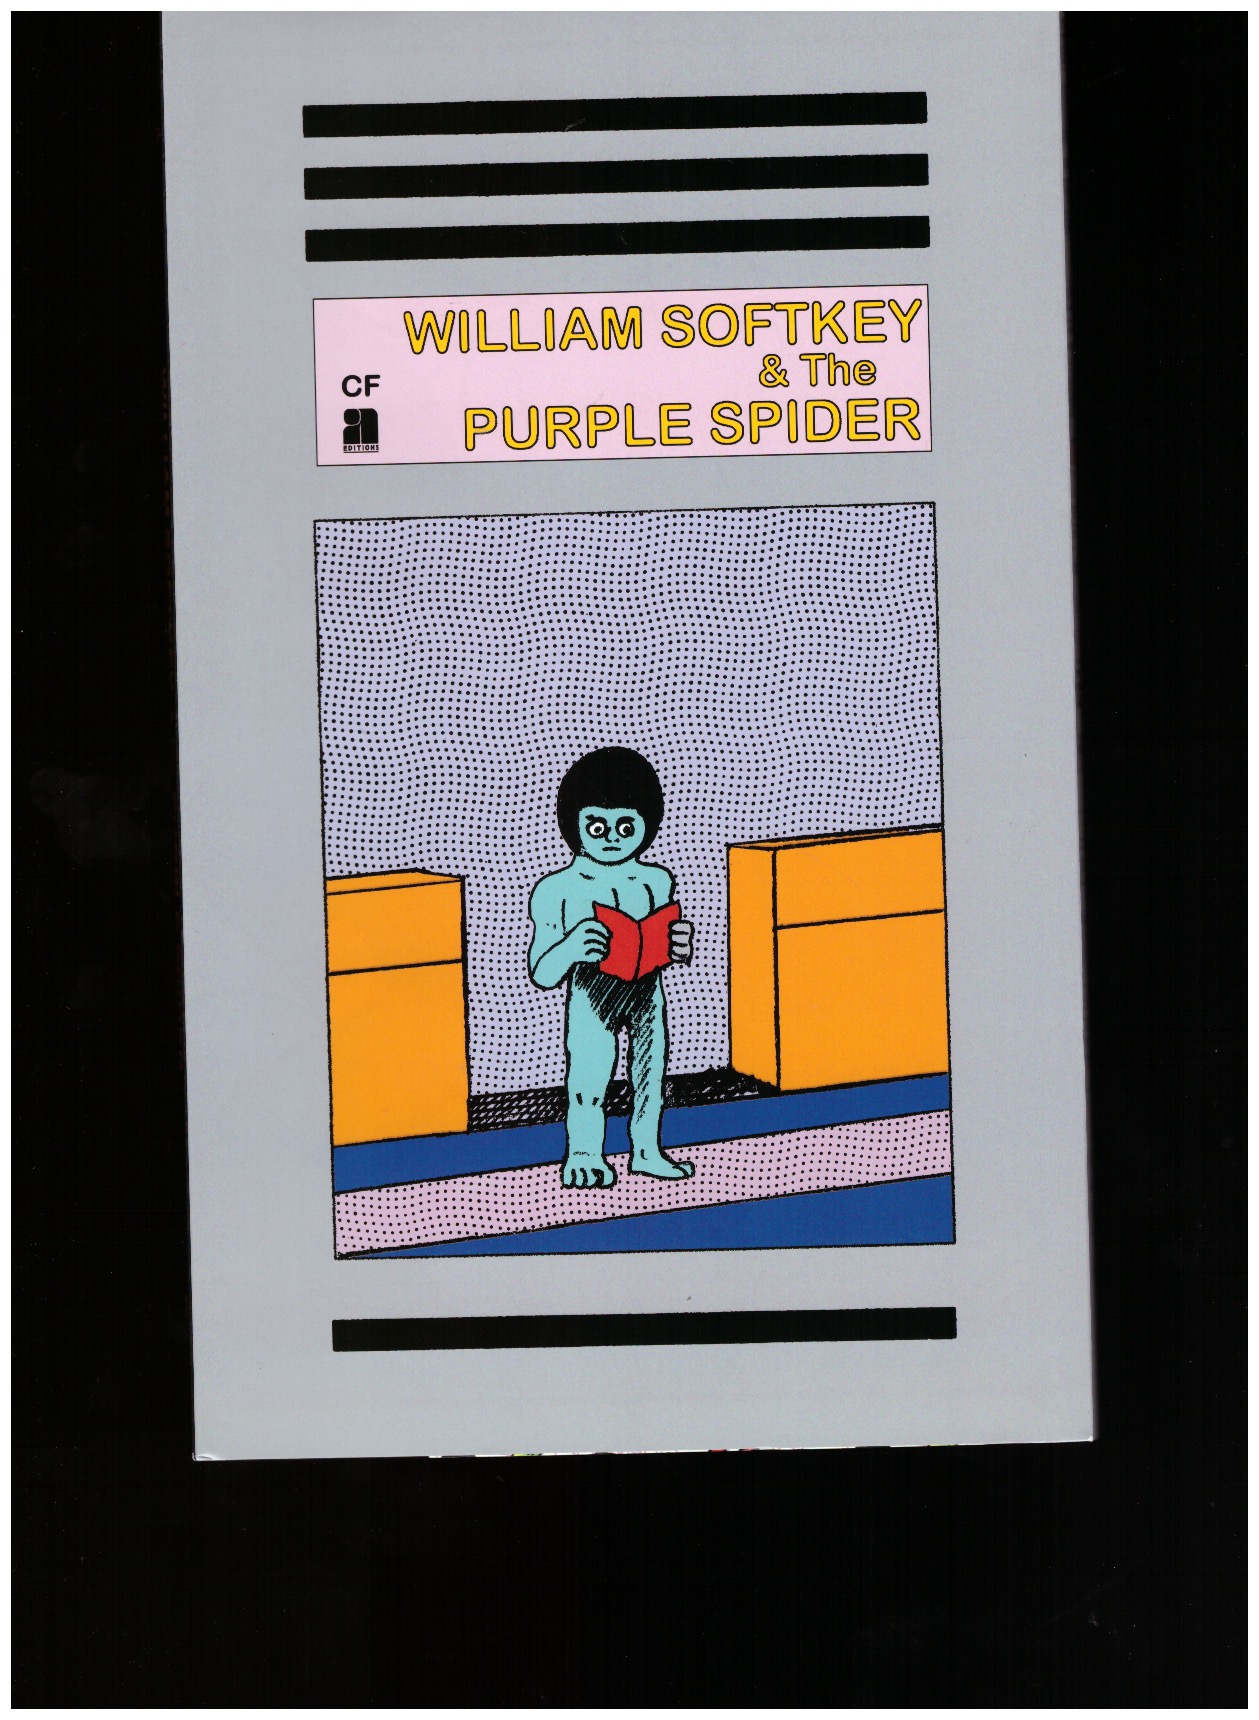 CF - William Softkey & The Purple Spider